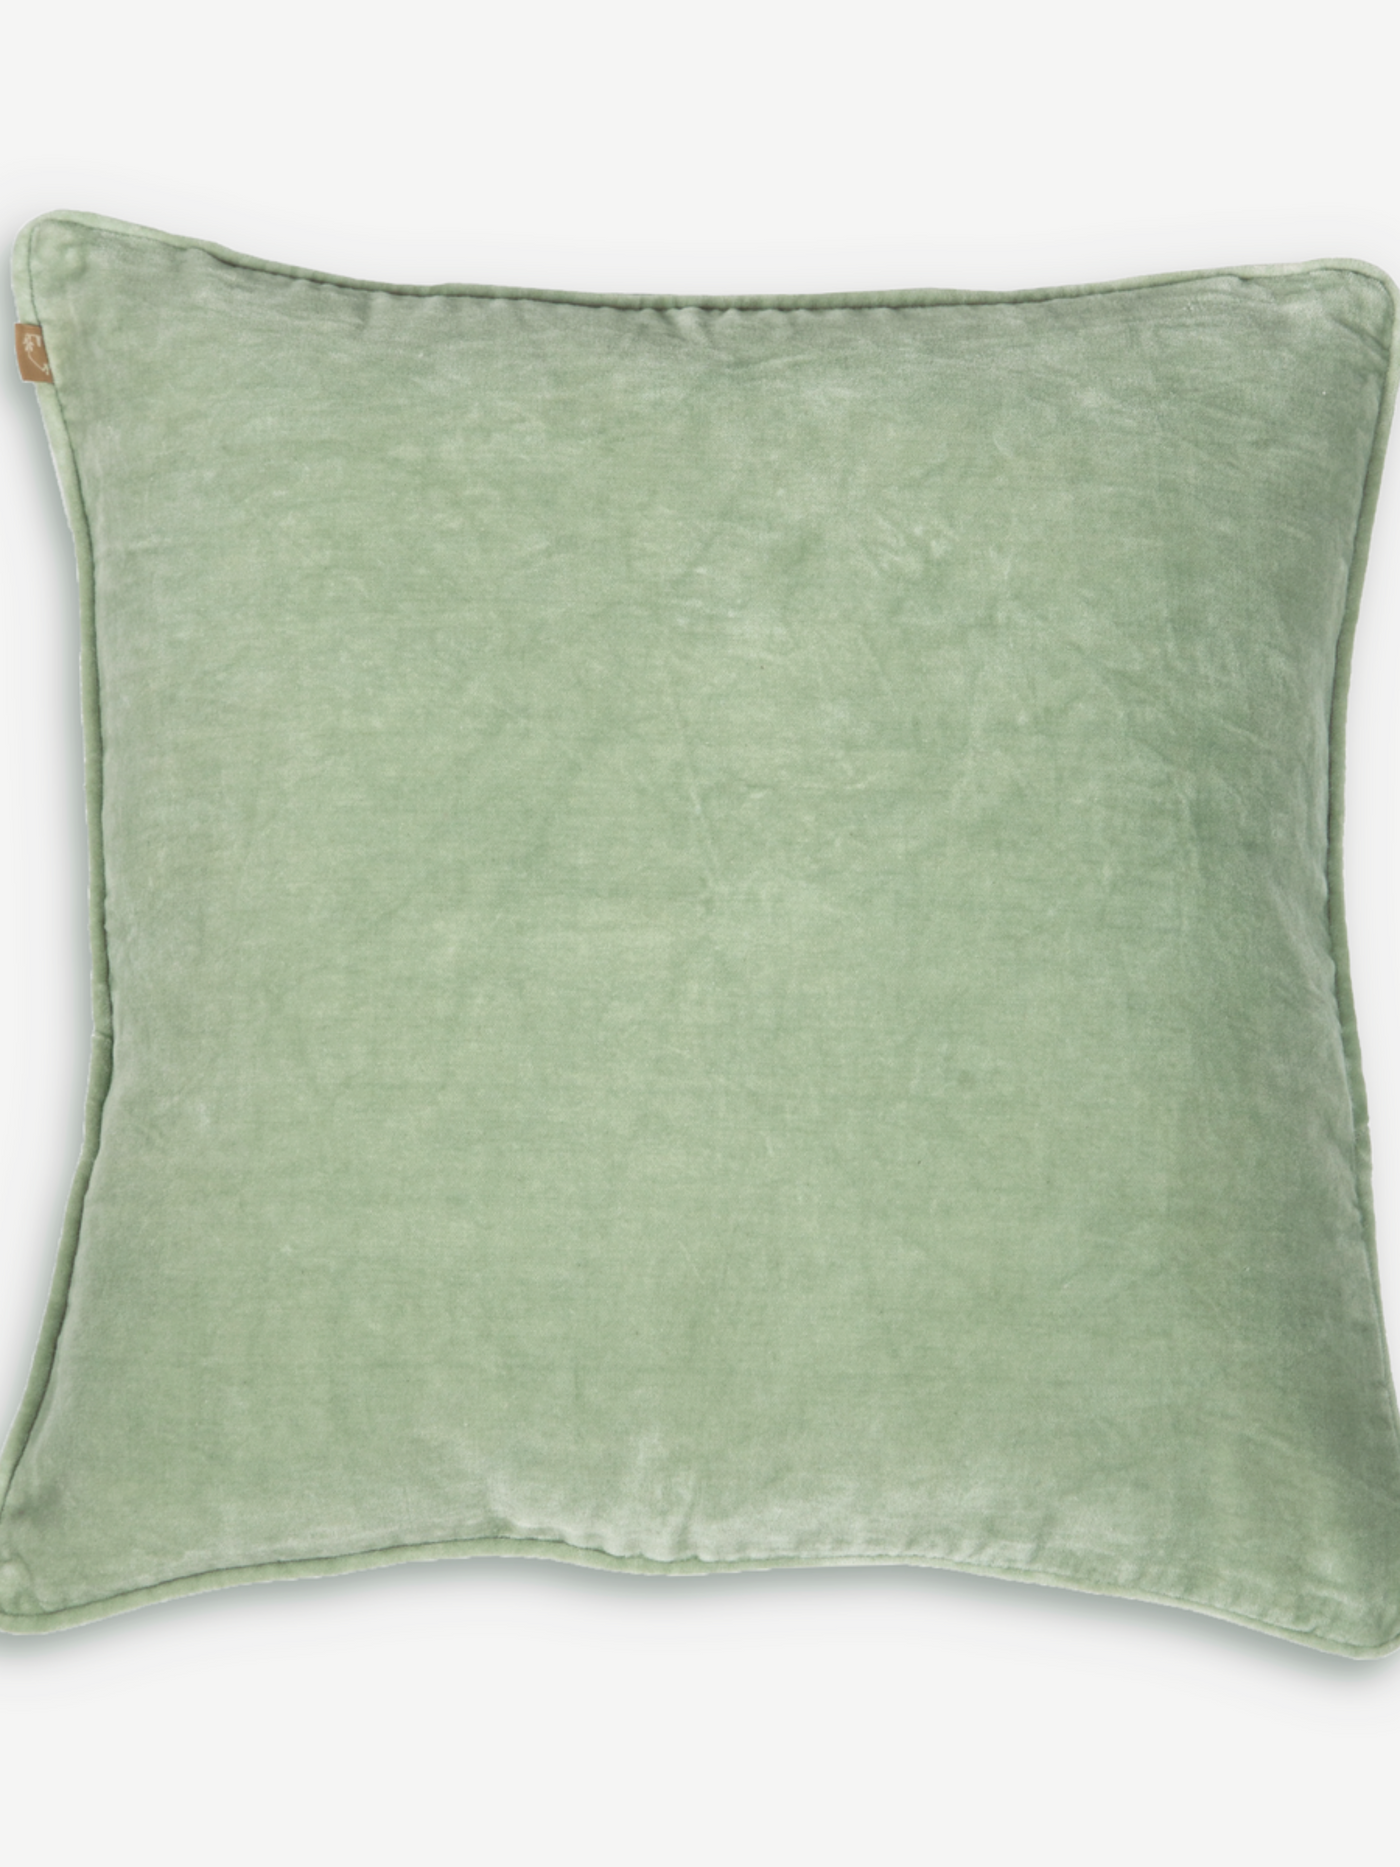 Cushion Cover - Seafoam Green Velvet Euro Sham